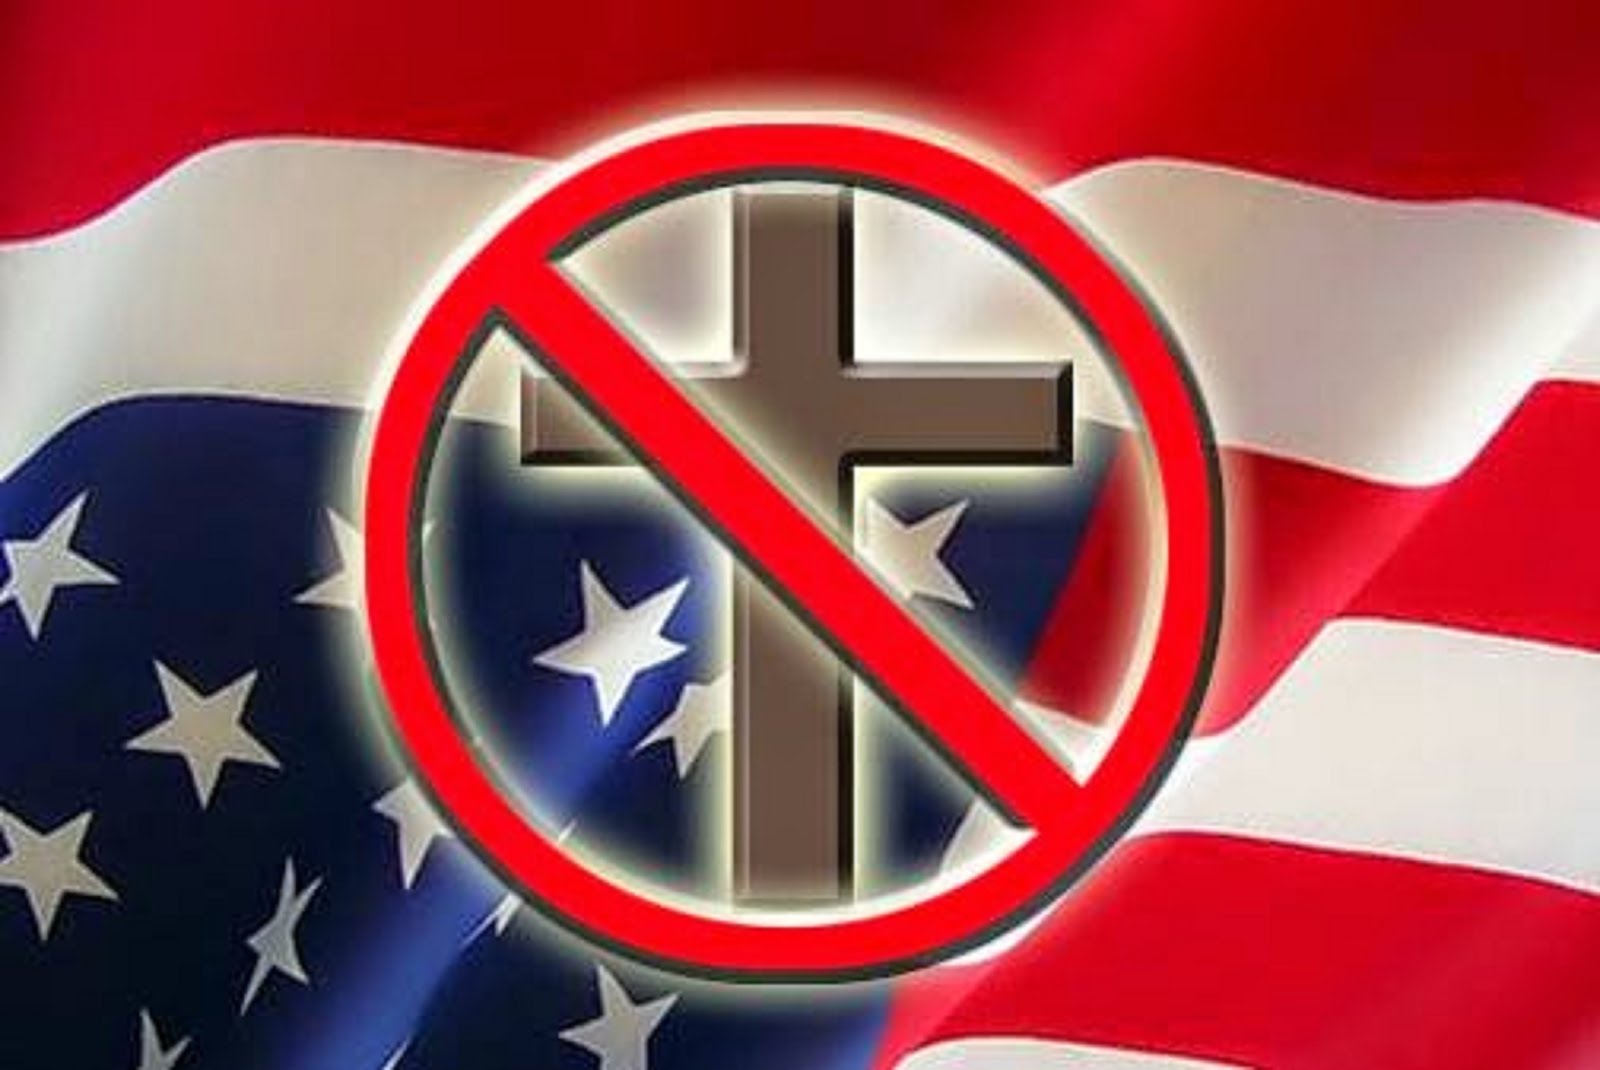 NO CHRIST IN AMERICA